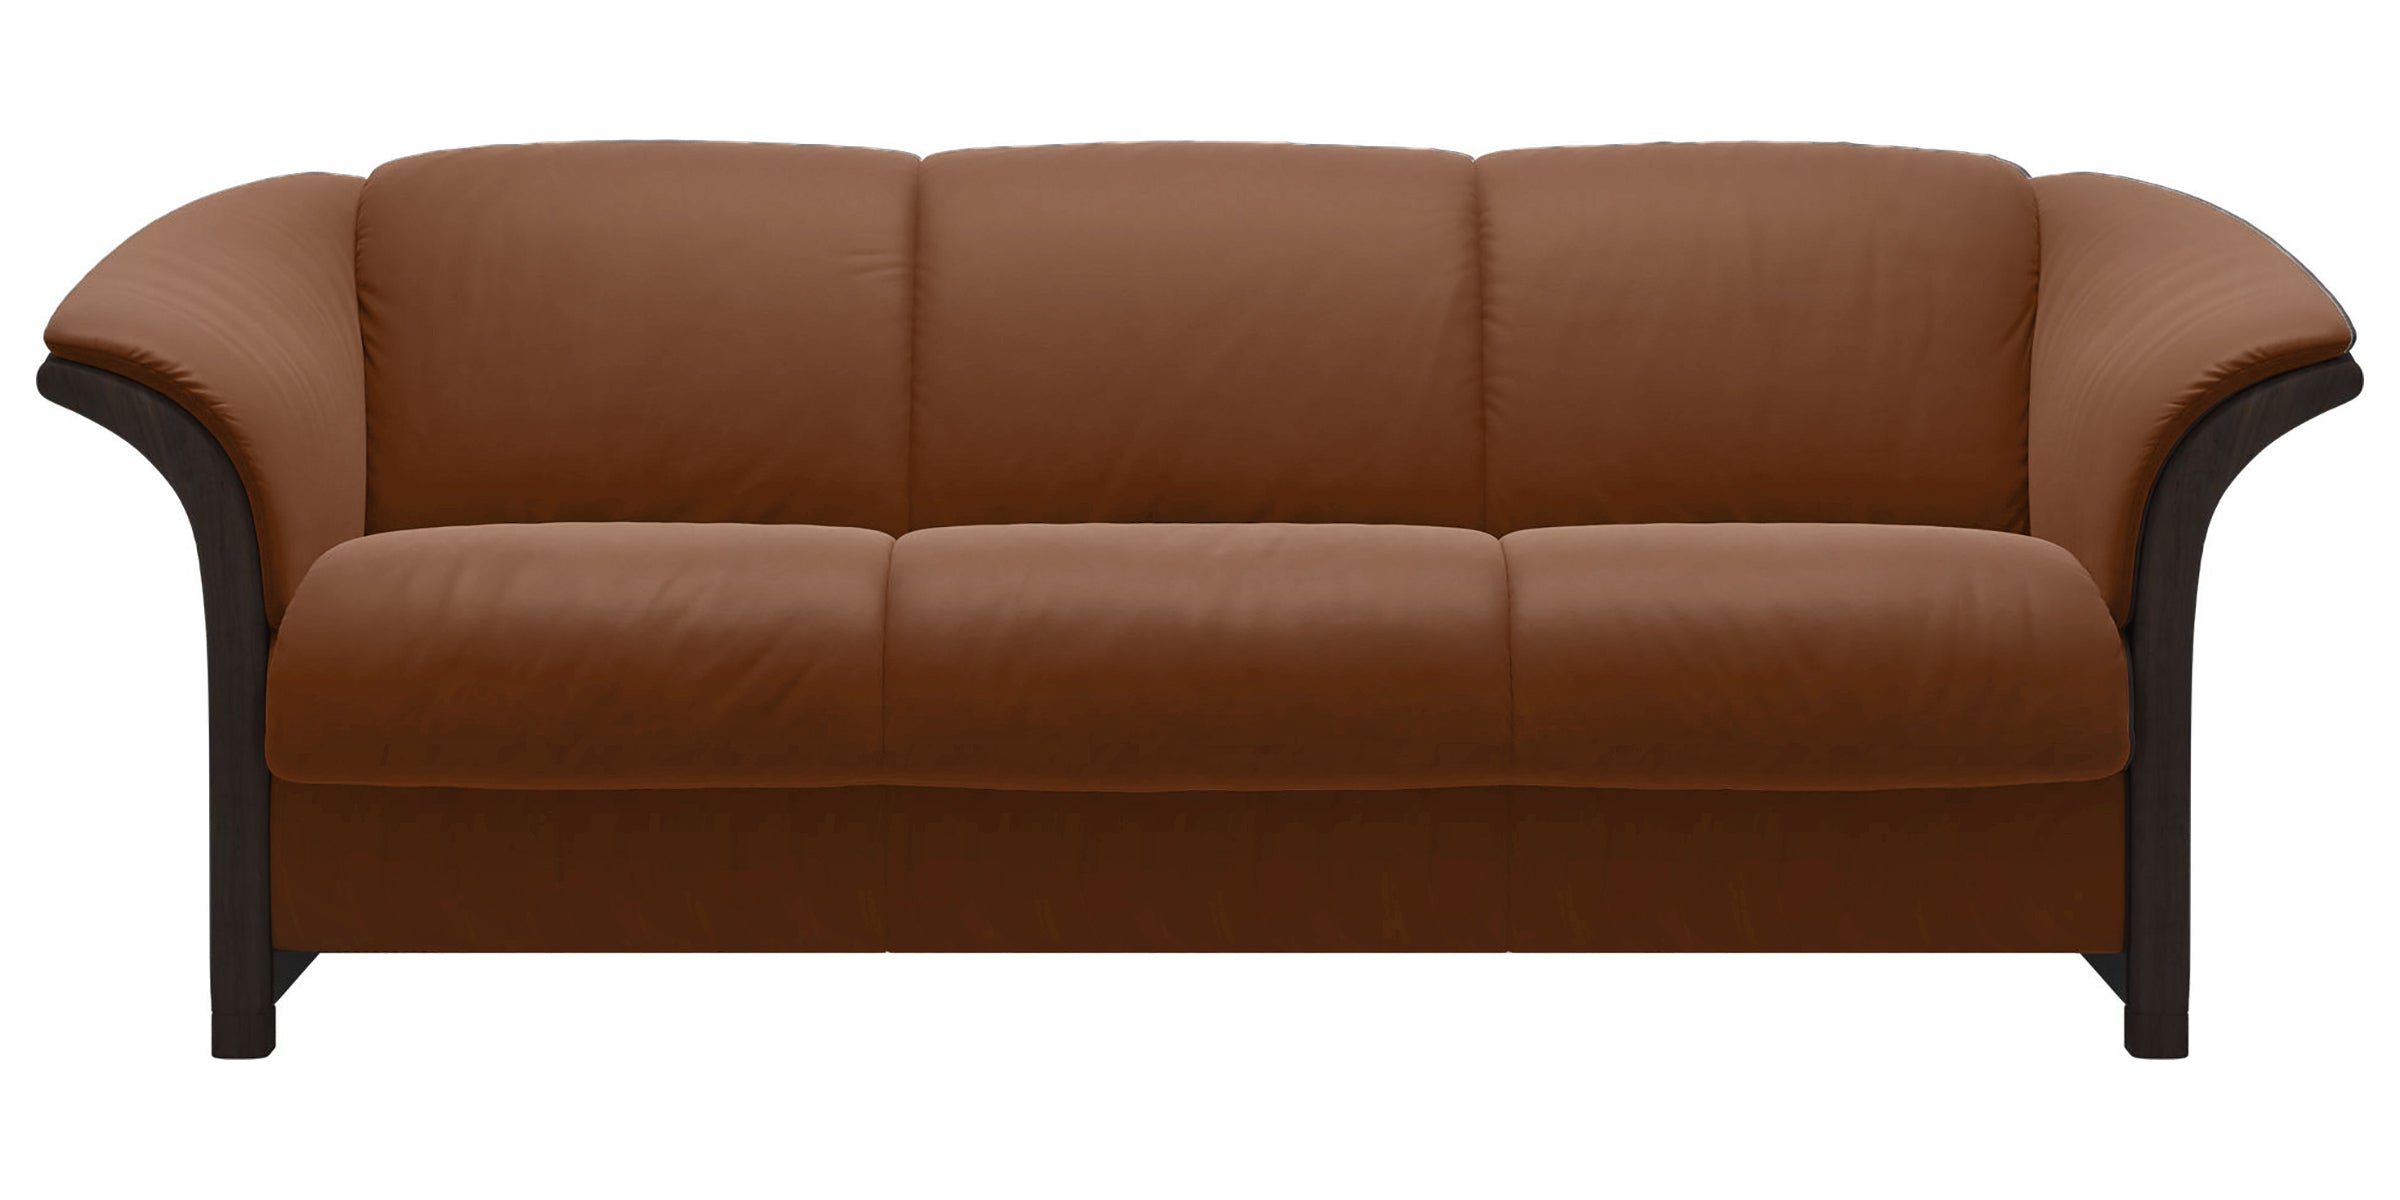 Paloma Leather New Cognac and Wenge Arm Trim | Stressless Manhattan Sofa | Valley Ridge Furniture